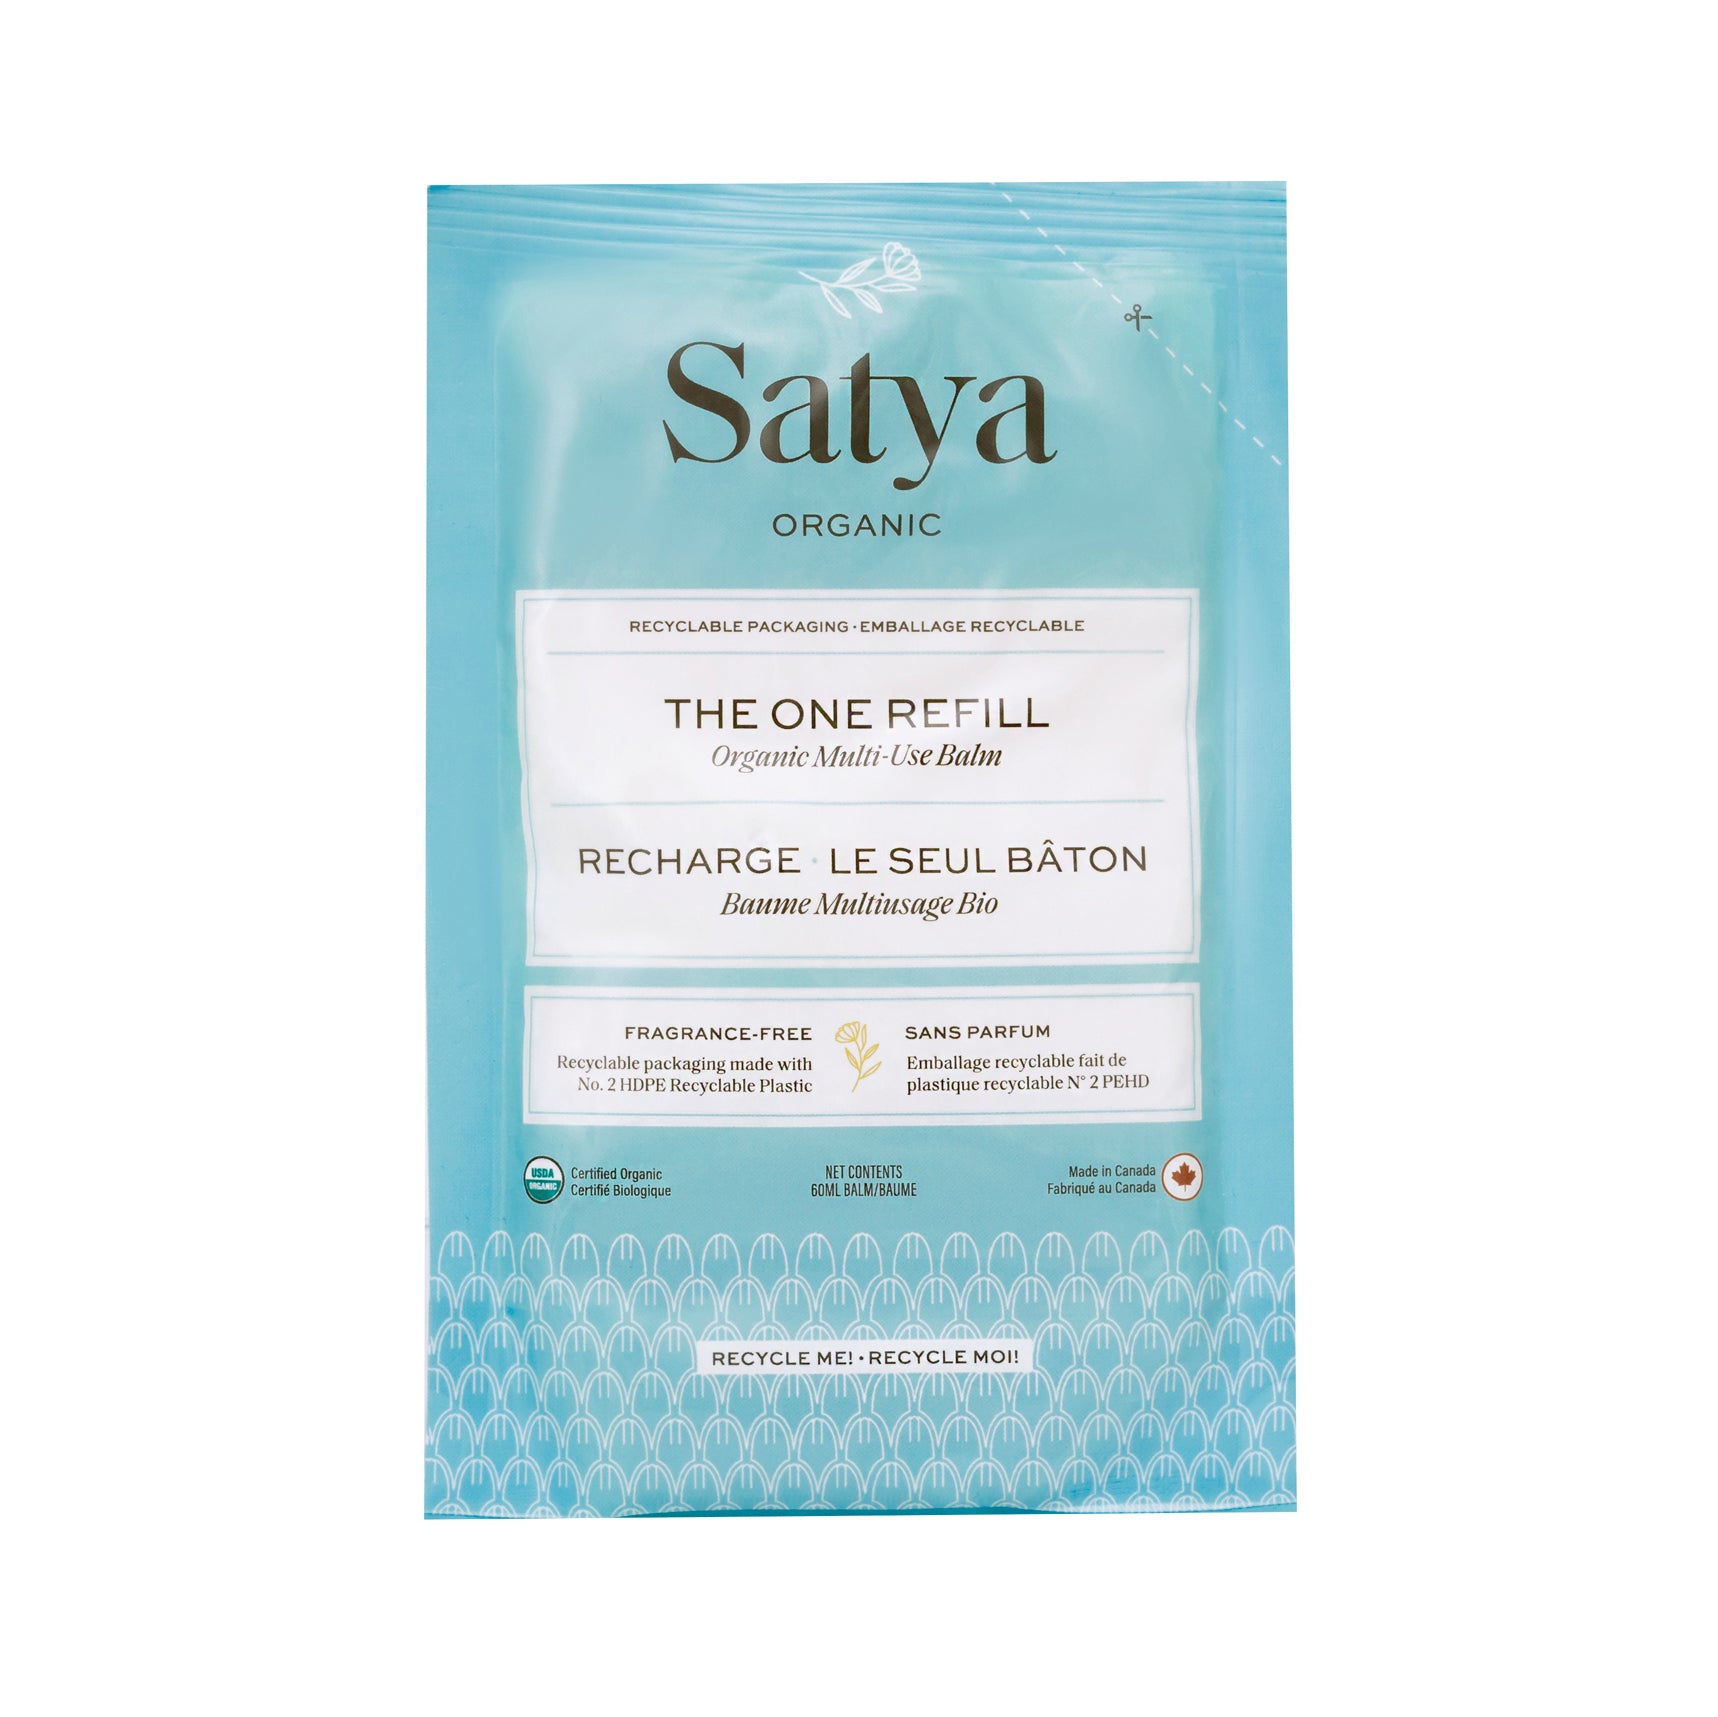 Satya Organic The One Refill pouch - an organic multi-use balm